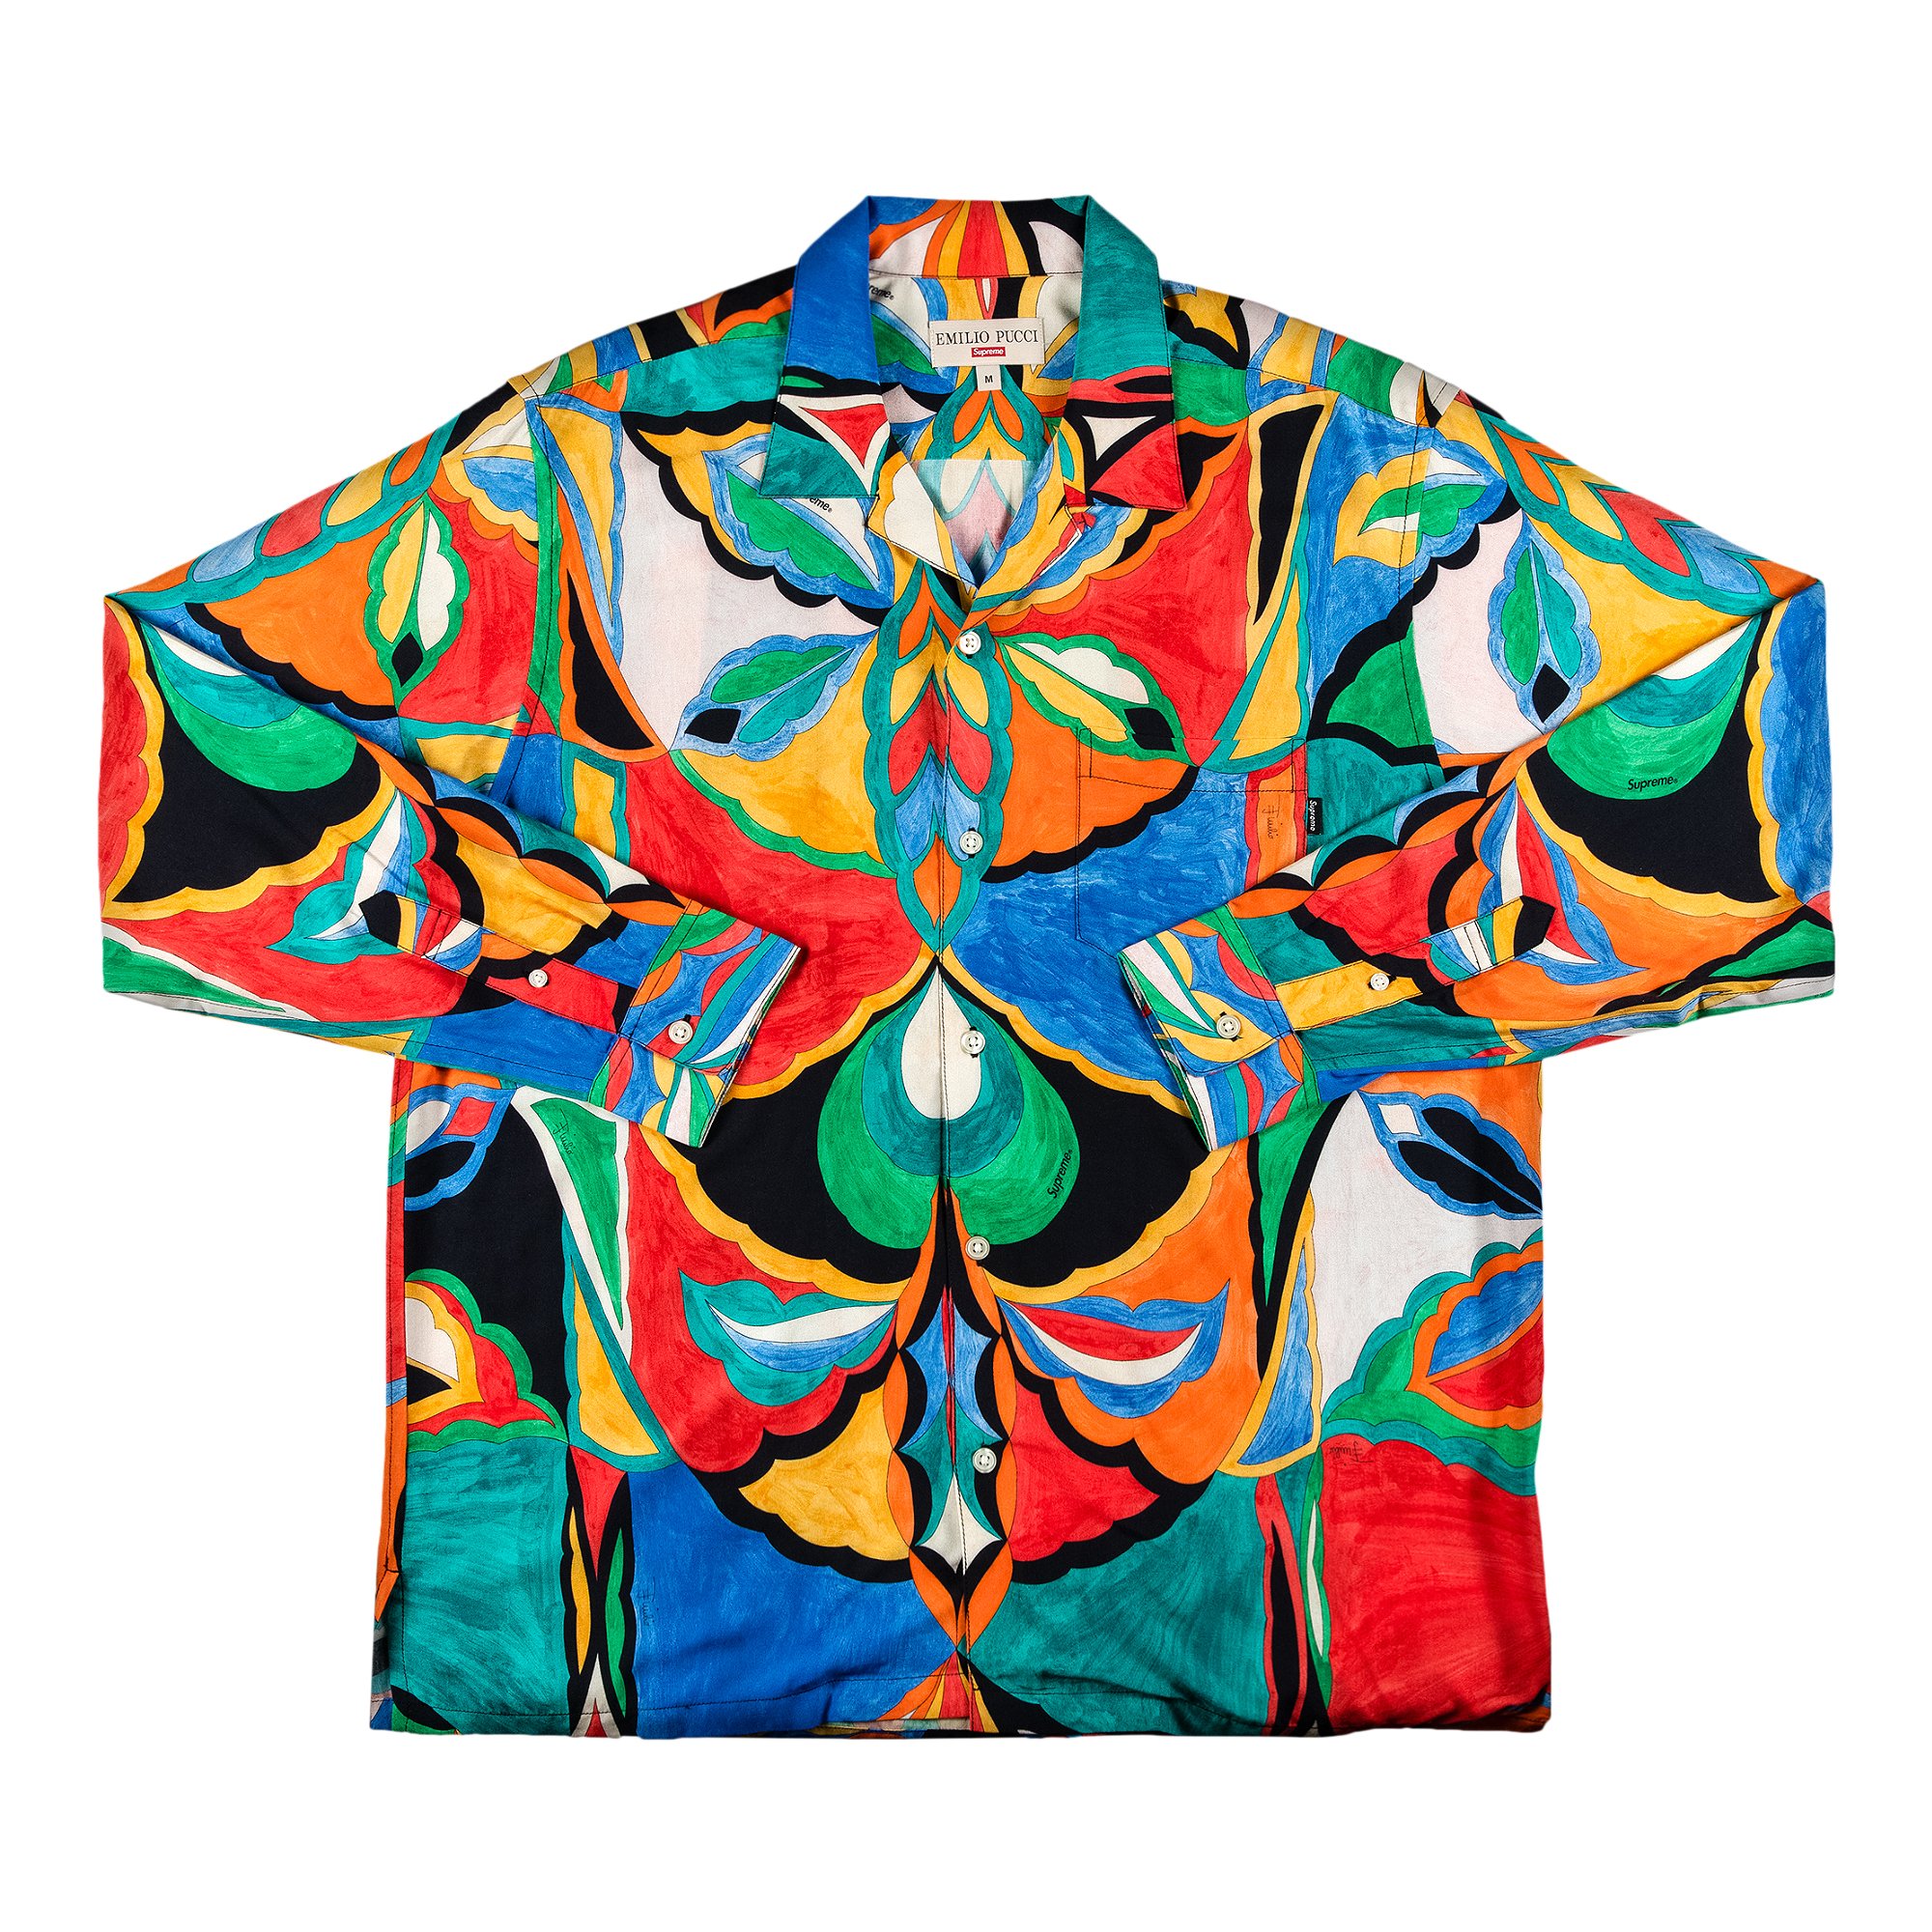 Buy Supreme x Emilio Pucci Long-Sleeve Shirt 'Multicolor